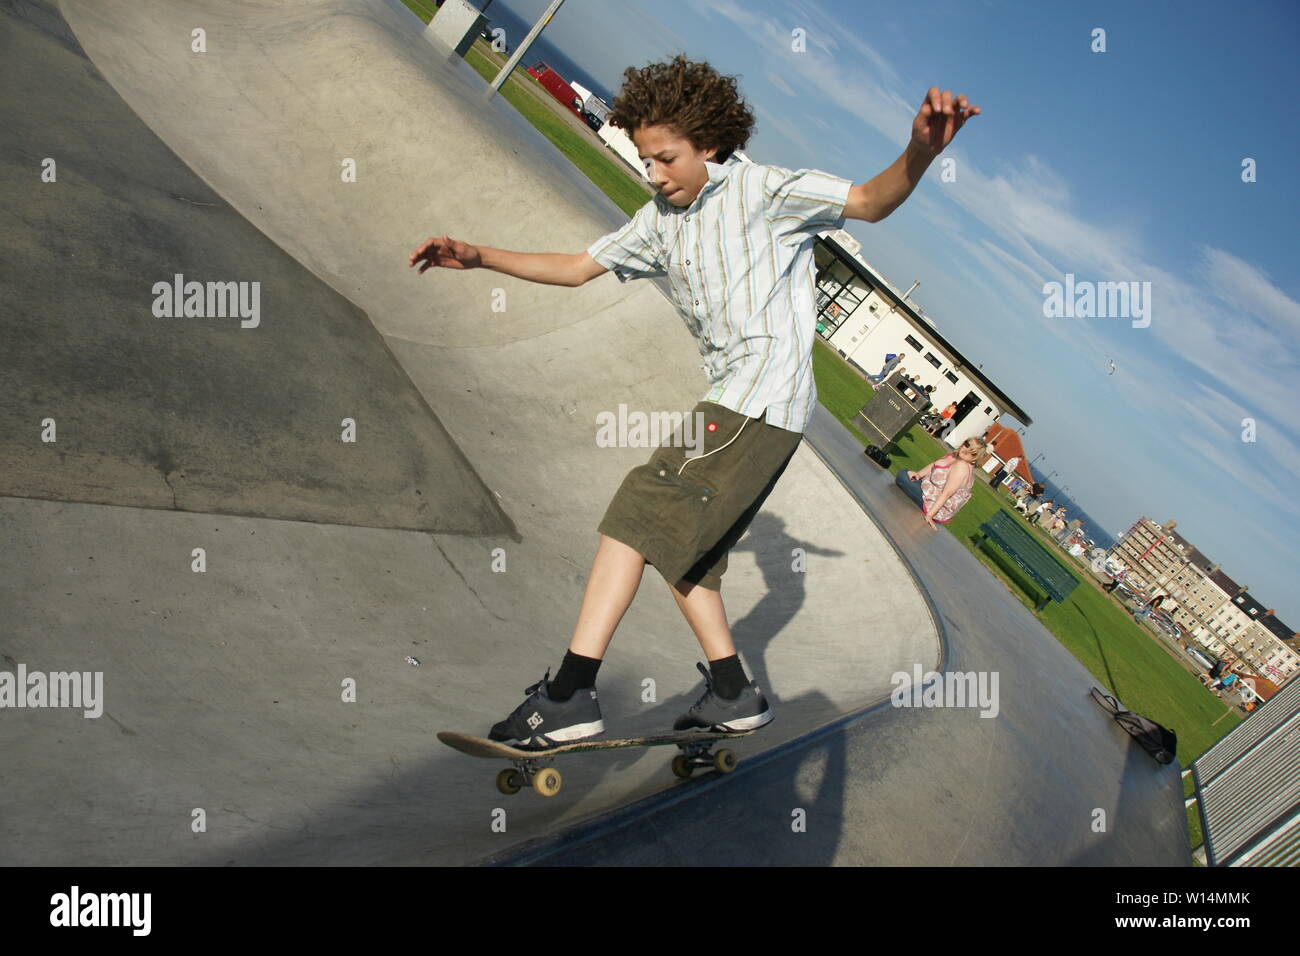 skateboarding Stock Photo